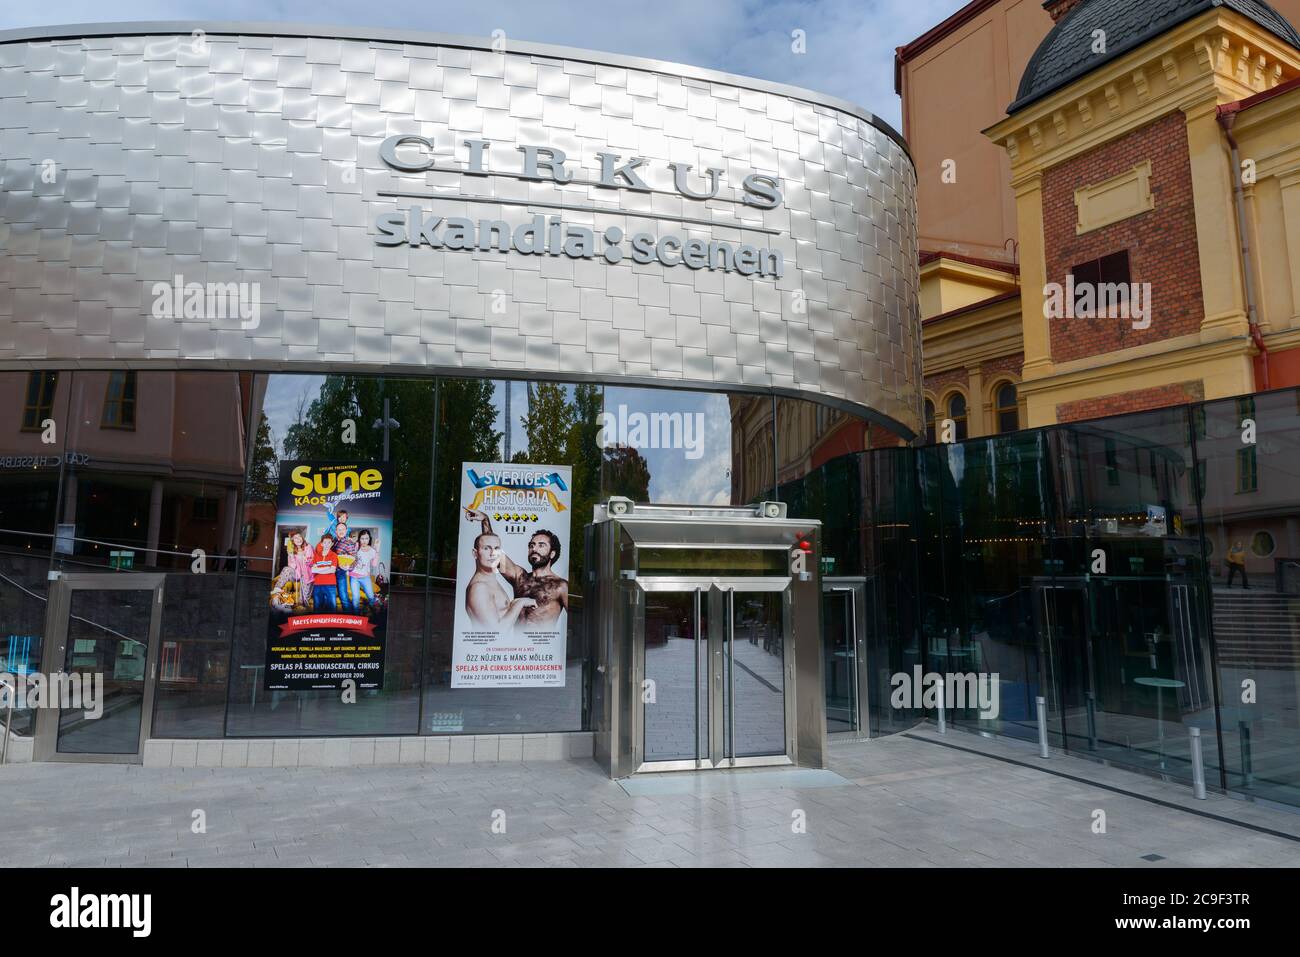 Entrance of Cirkus Skandia Scenen Entertainment in Sweden Stock Photo